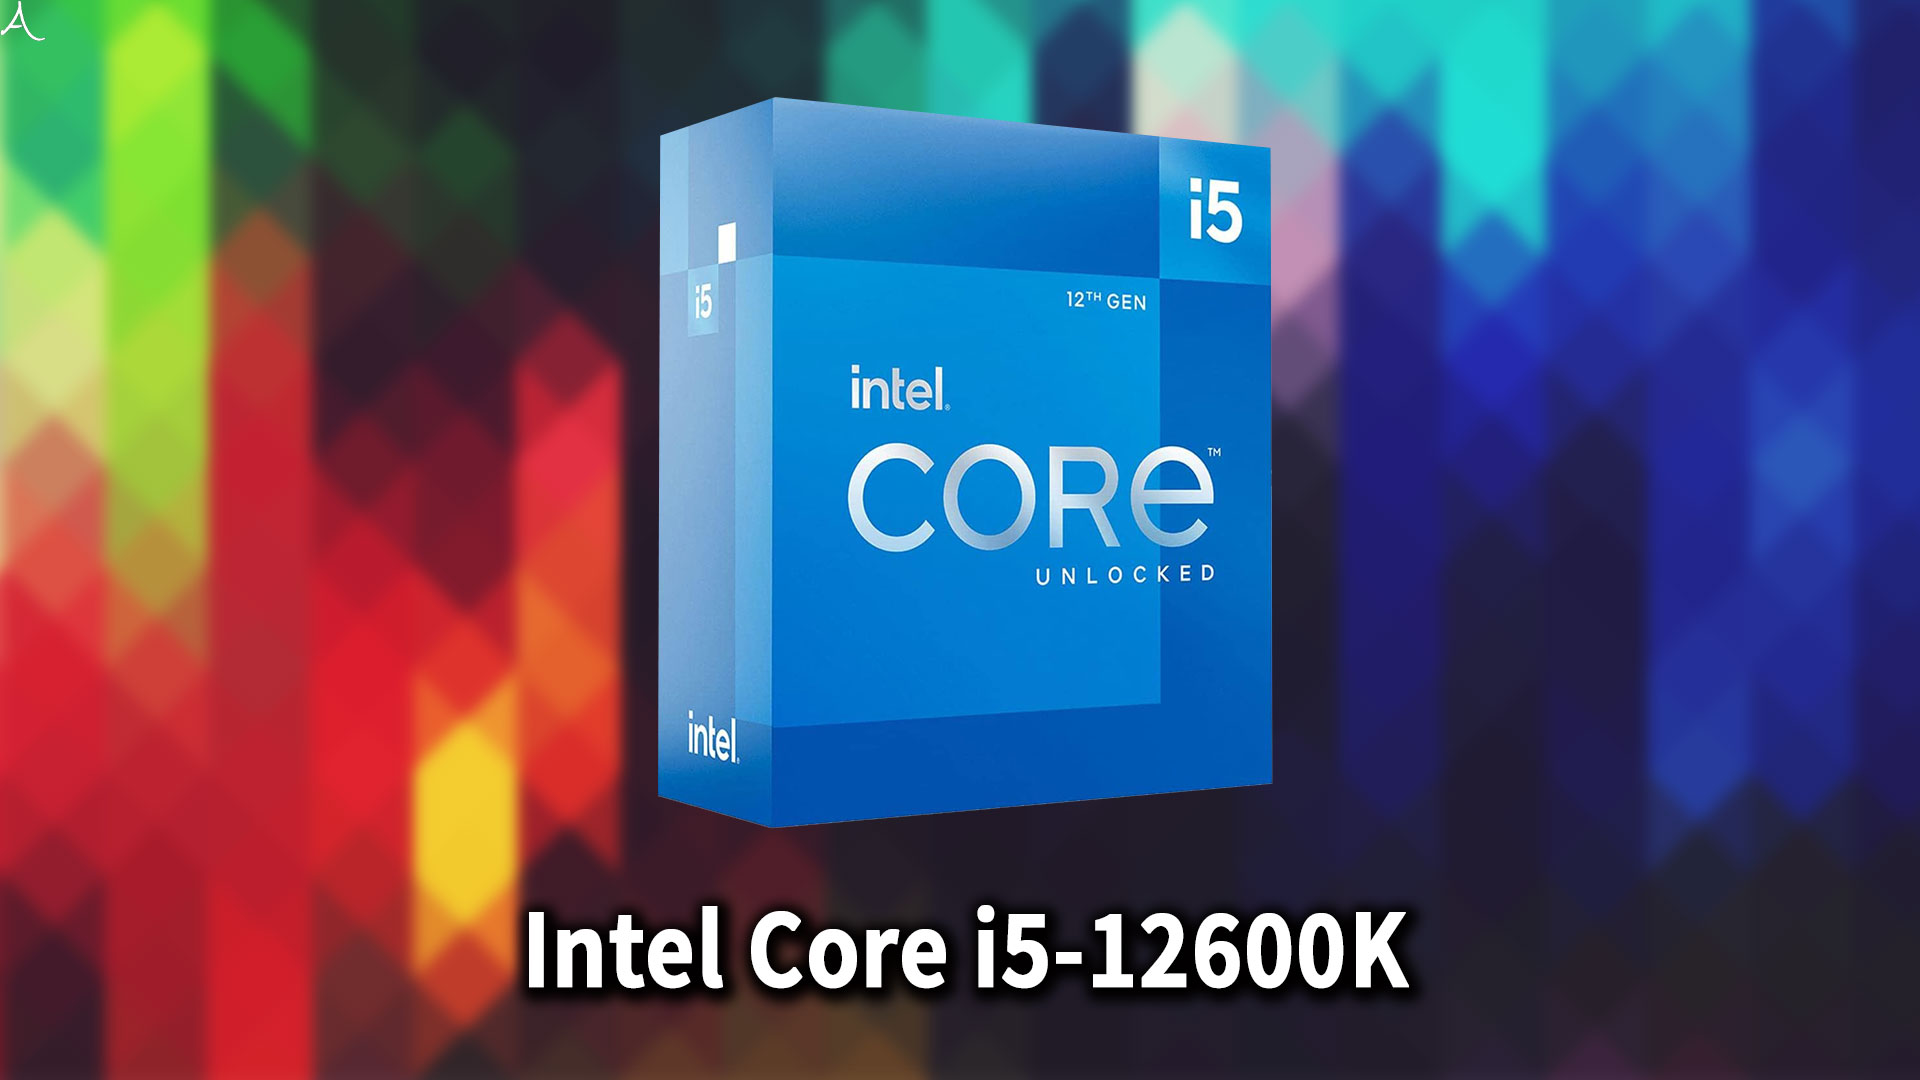 ｢Intel Core i5-12600K｣の消費電力は？おすすめの電源容量はどれくらい？